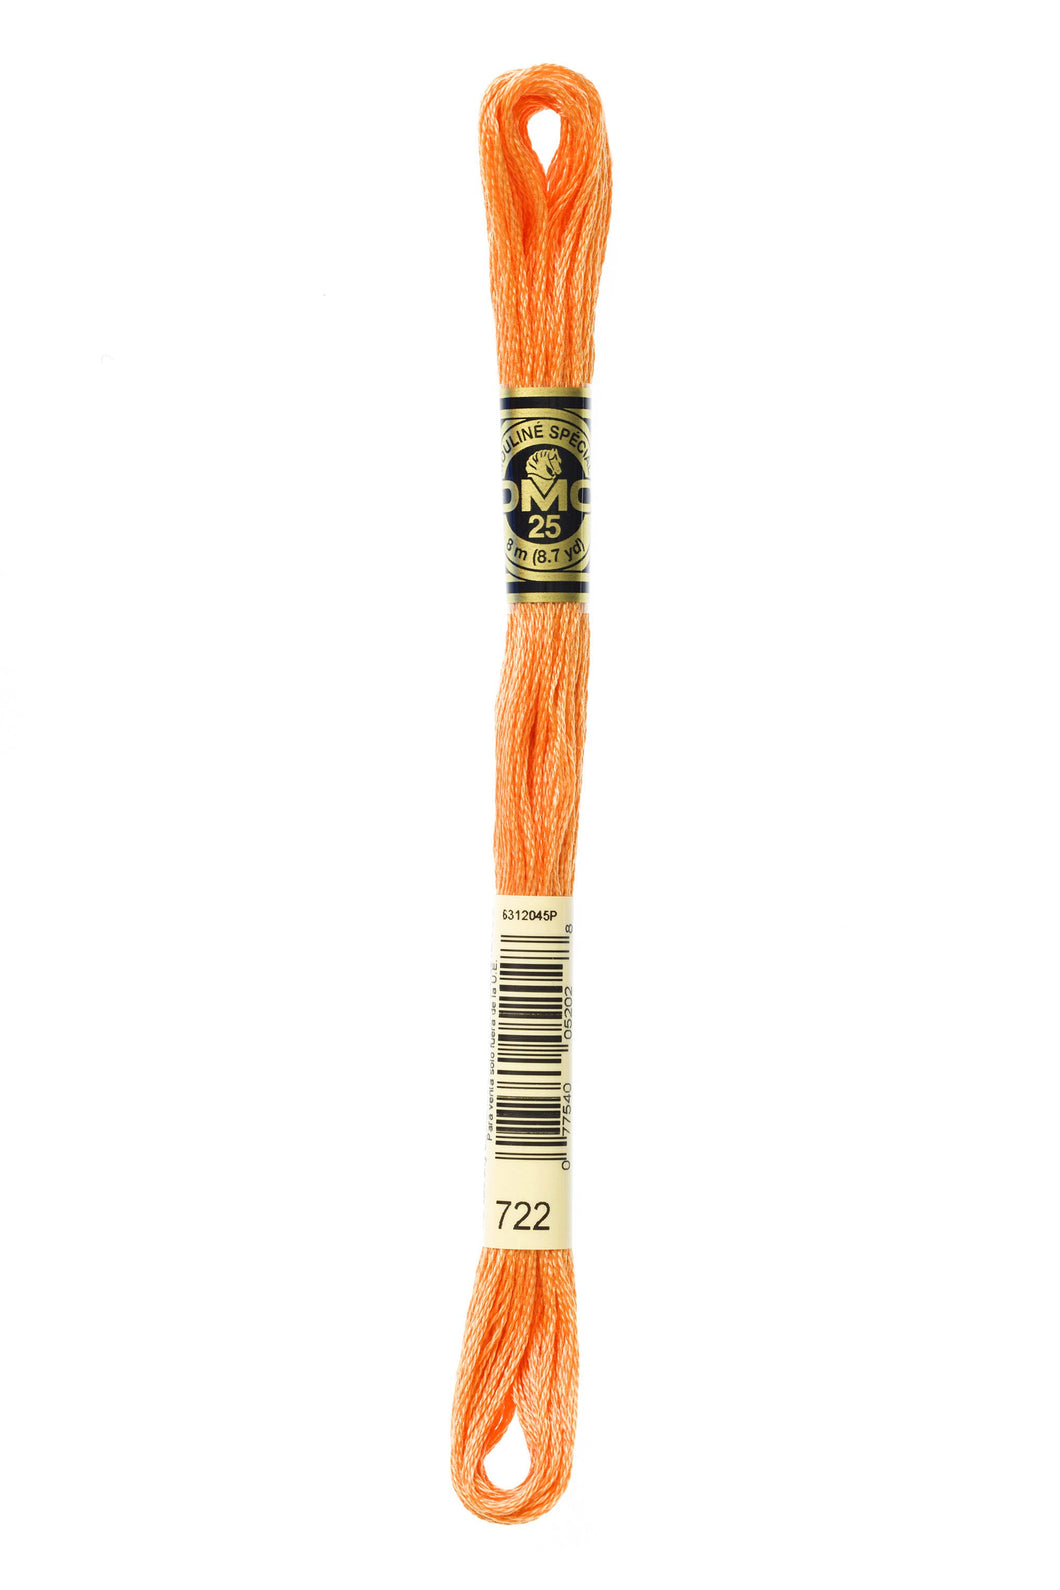 DMC 722 Light Orange Spice 6-Strand Embroidery Floss